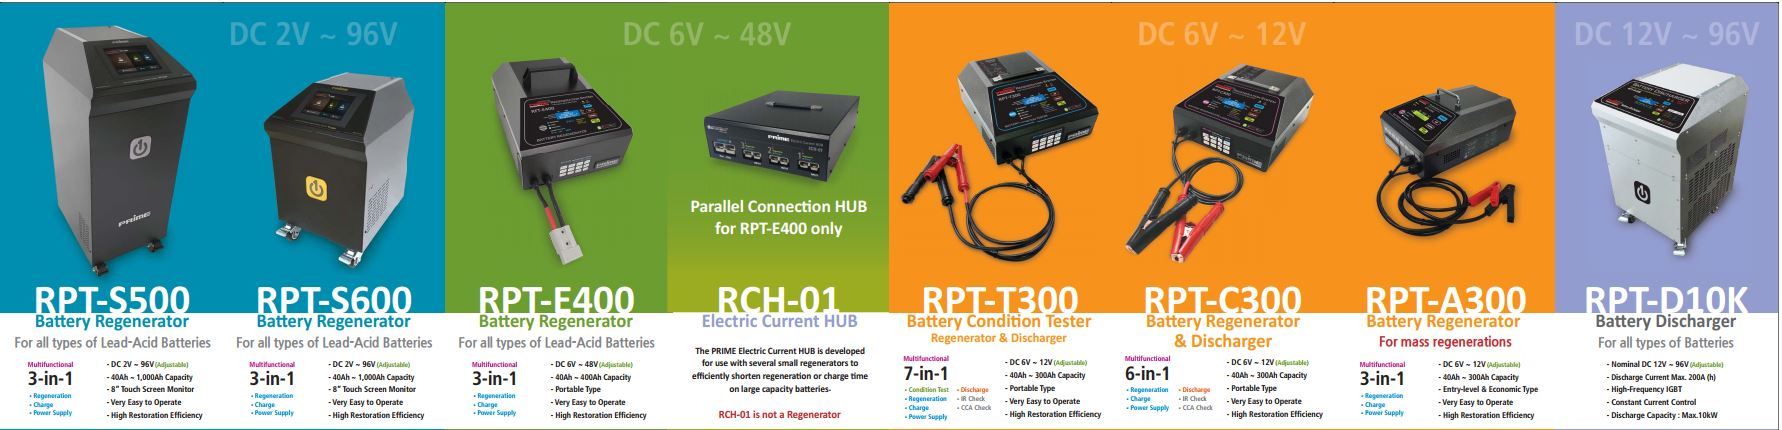 RPT-T300 Battery Condition Tester & Regenerator (7-in-1)